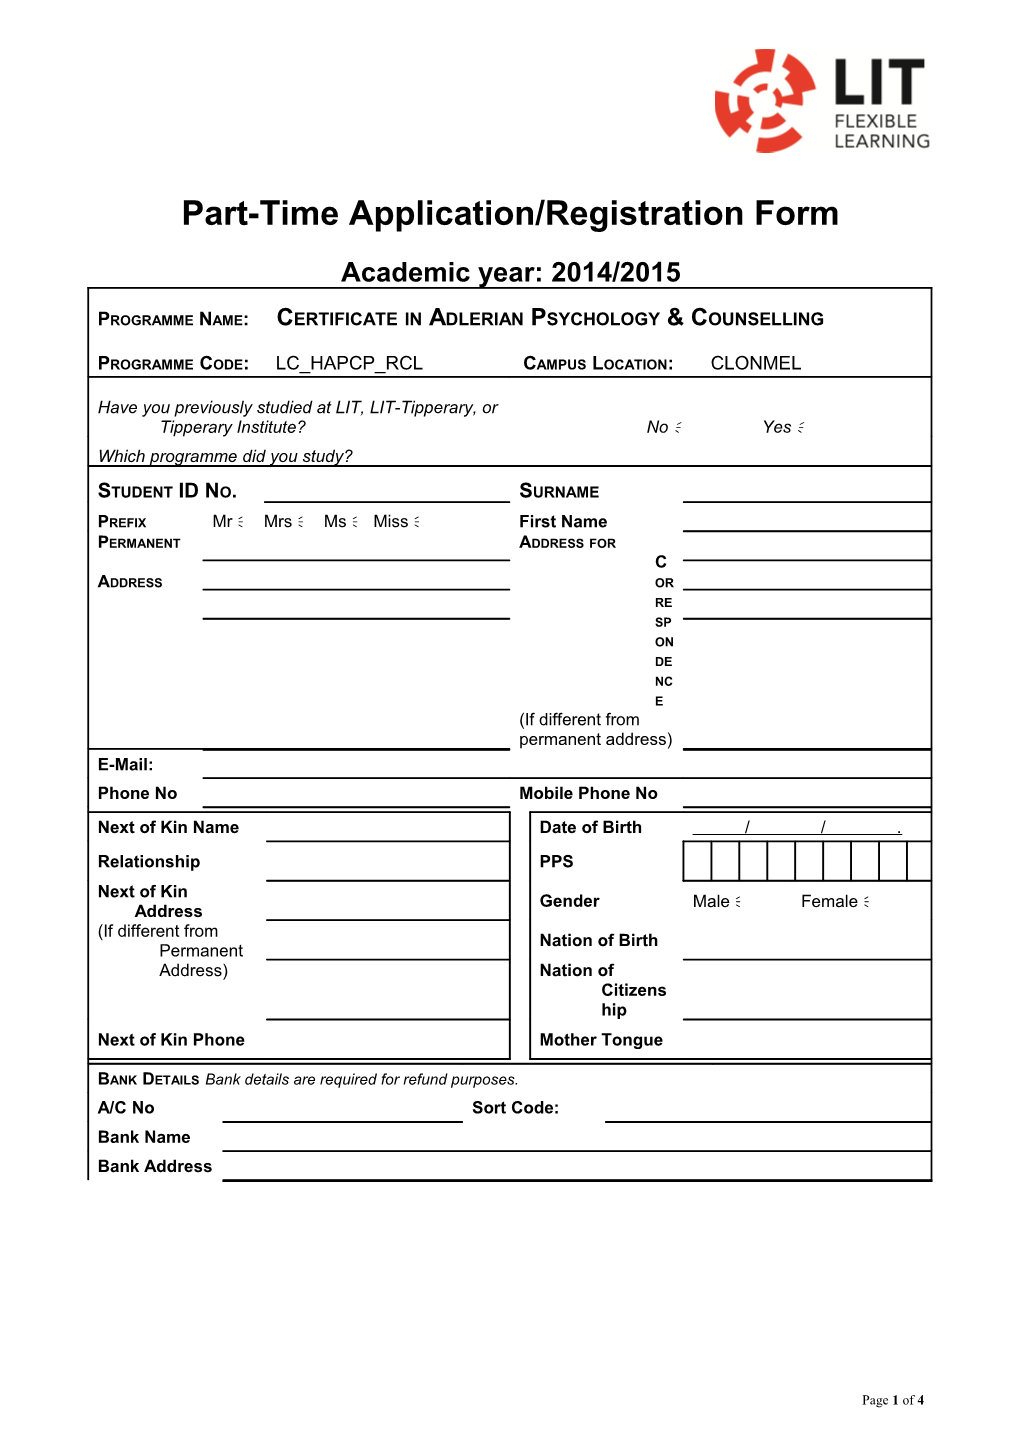 Part-Time Application/Registration Form